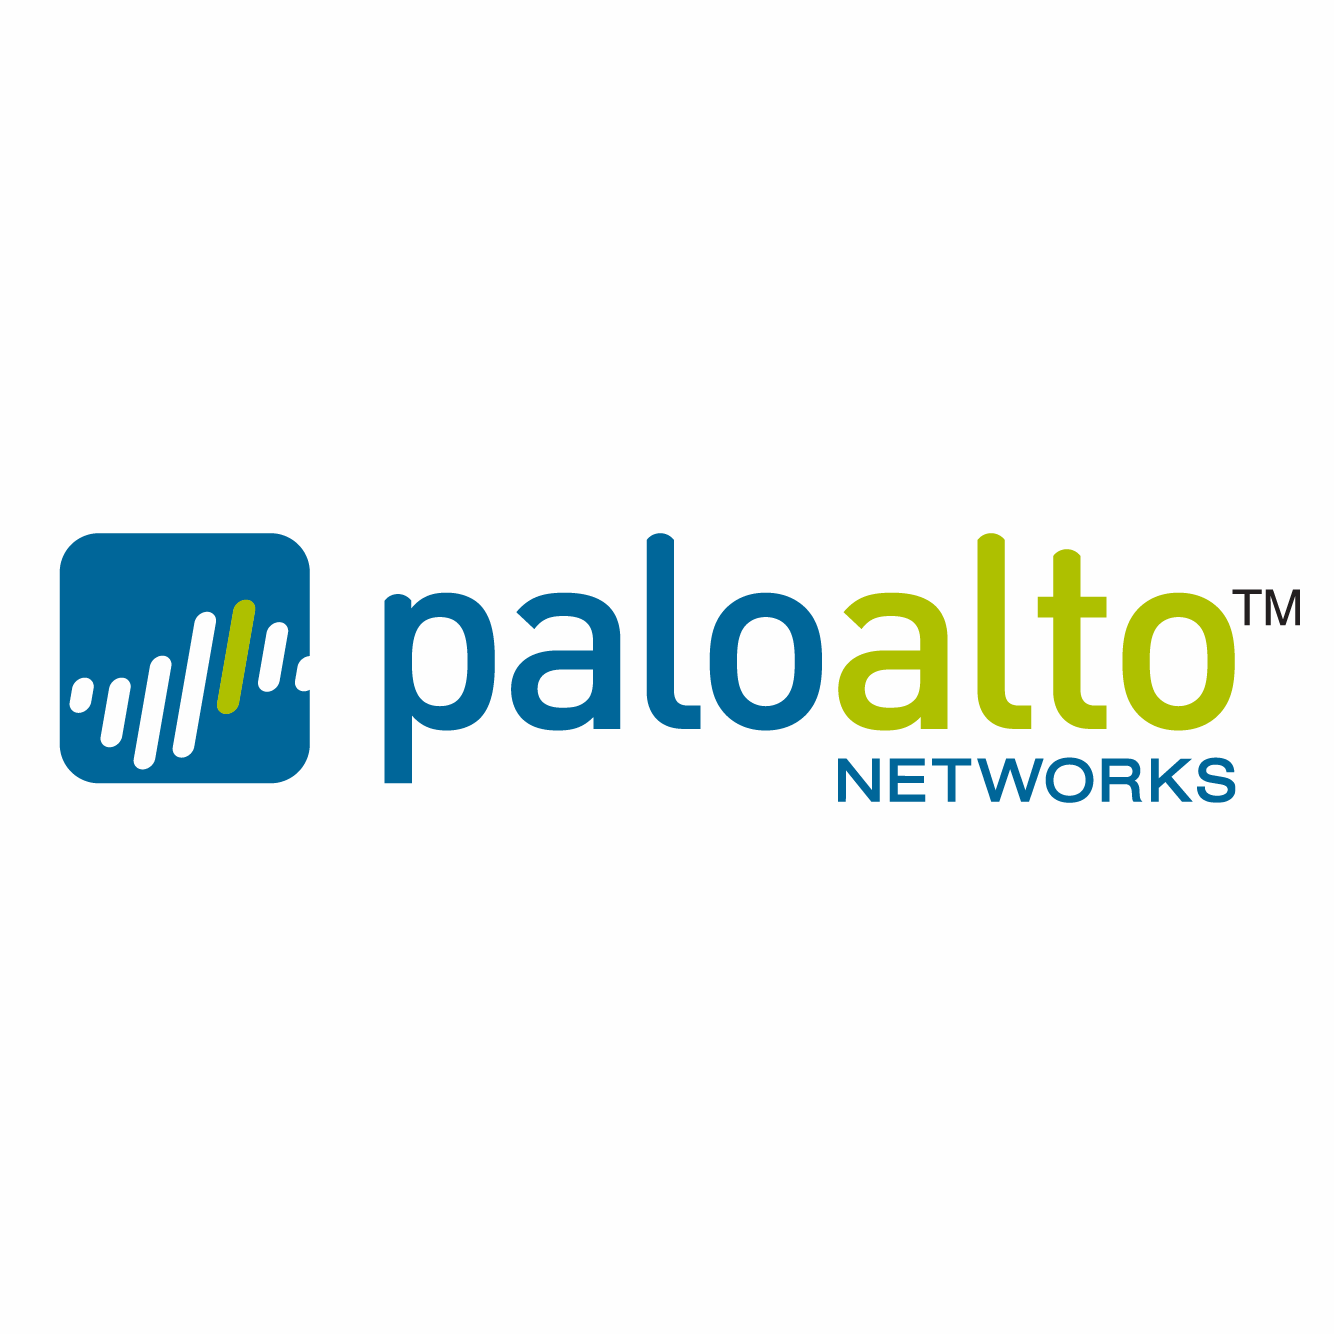 http://securetech.ae/wp-content/uploads/2019/02/15.PALOALTONWS.png